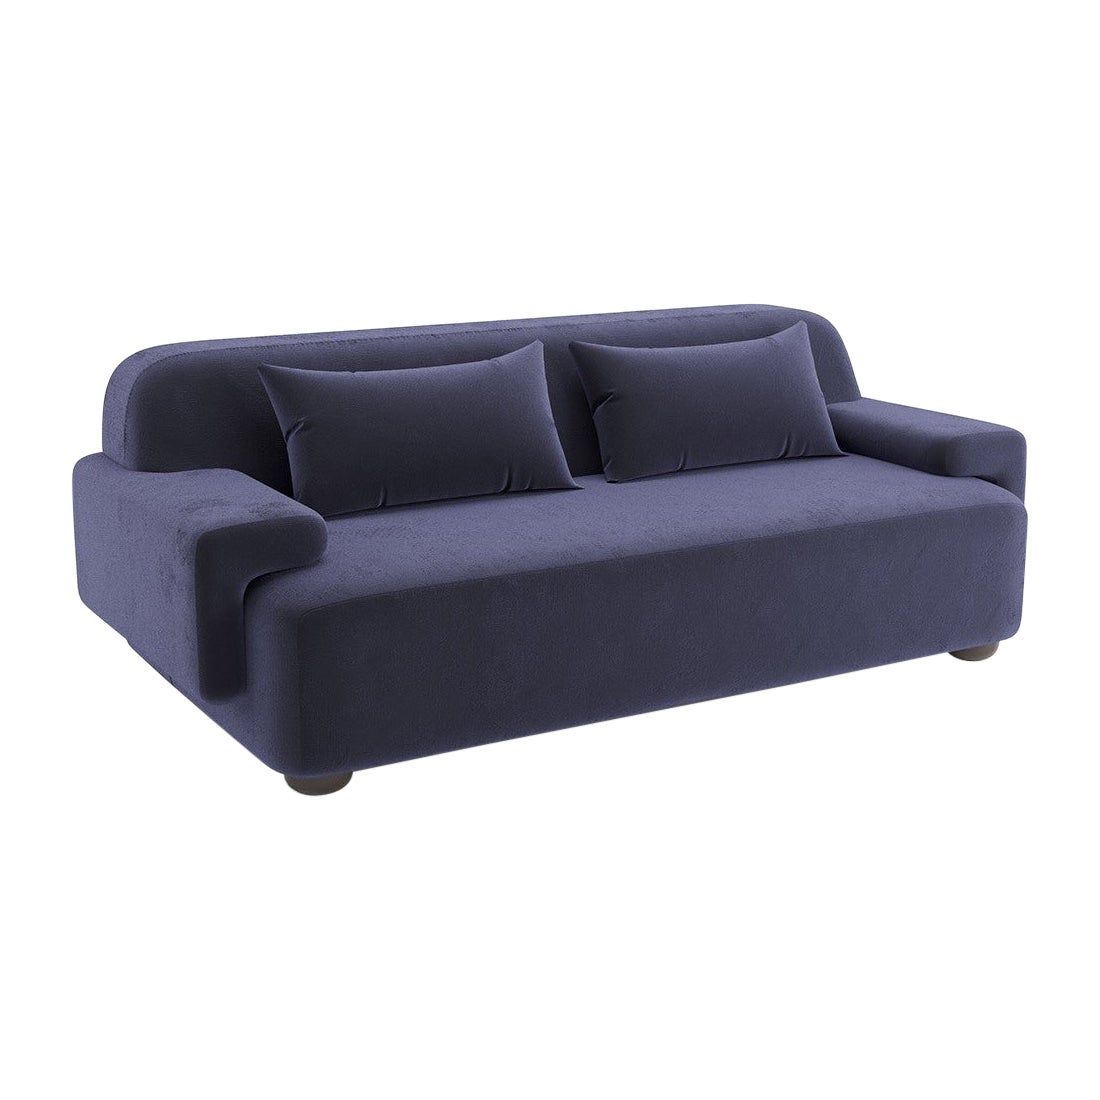 Popus Editions Lena 3 Seater Sofa in Marine Navy Como Velvet Upholstery For Sale